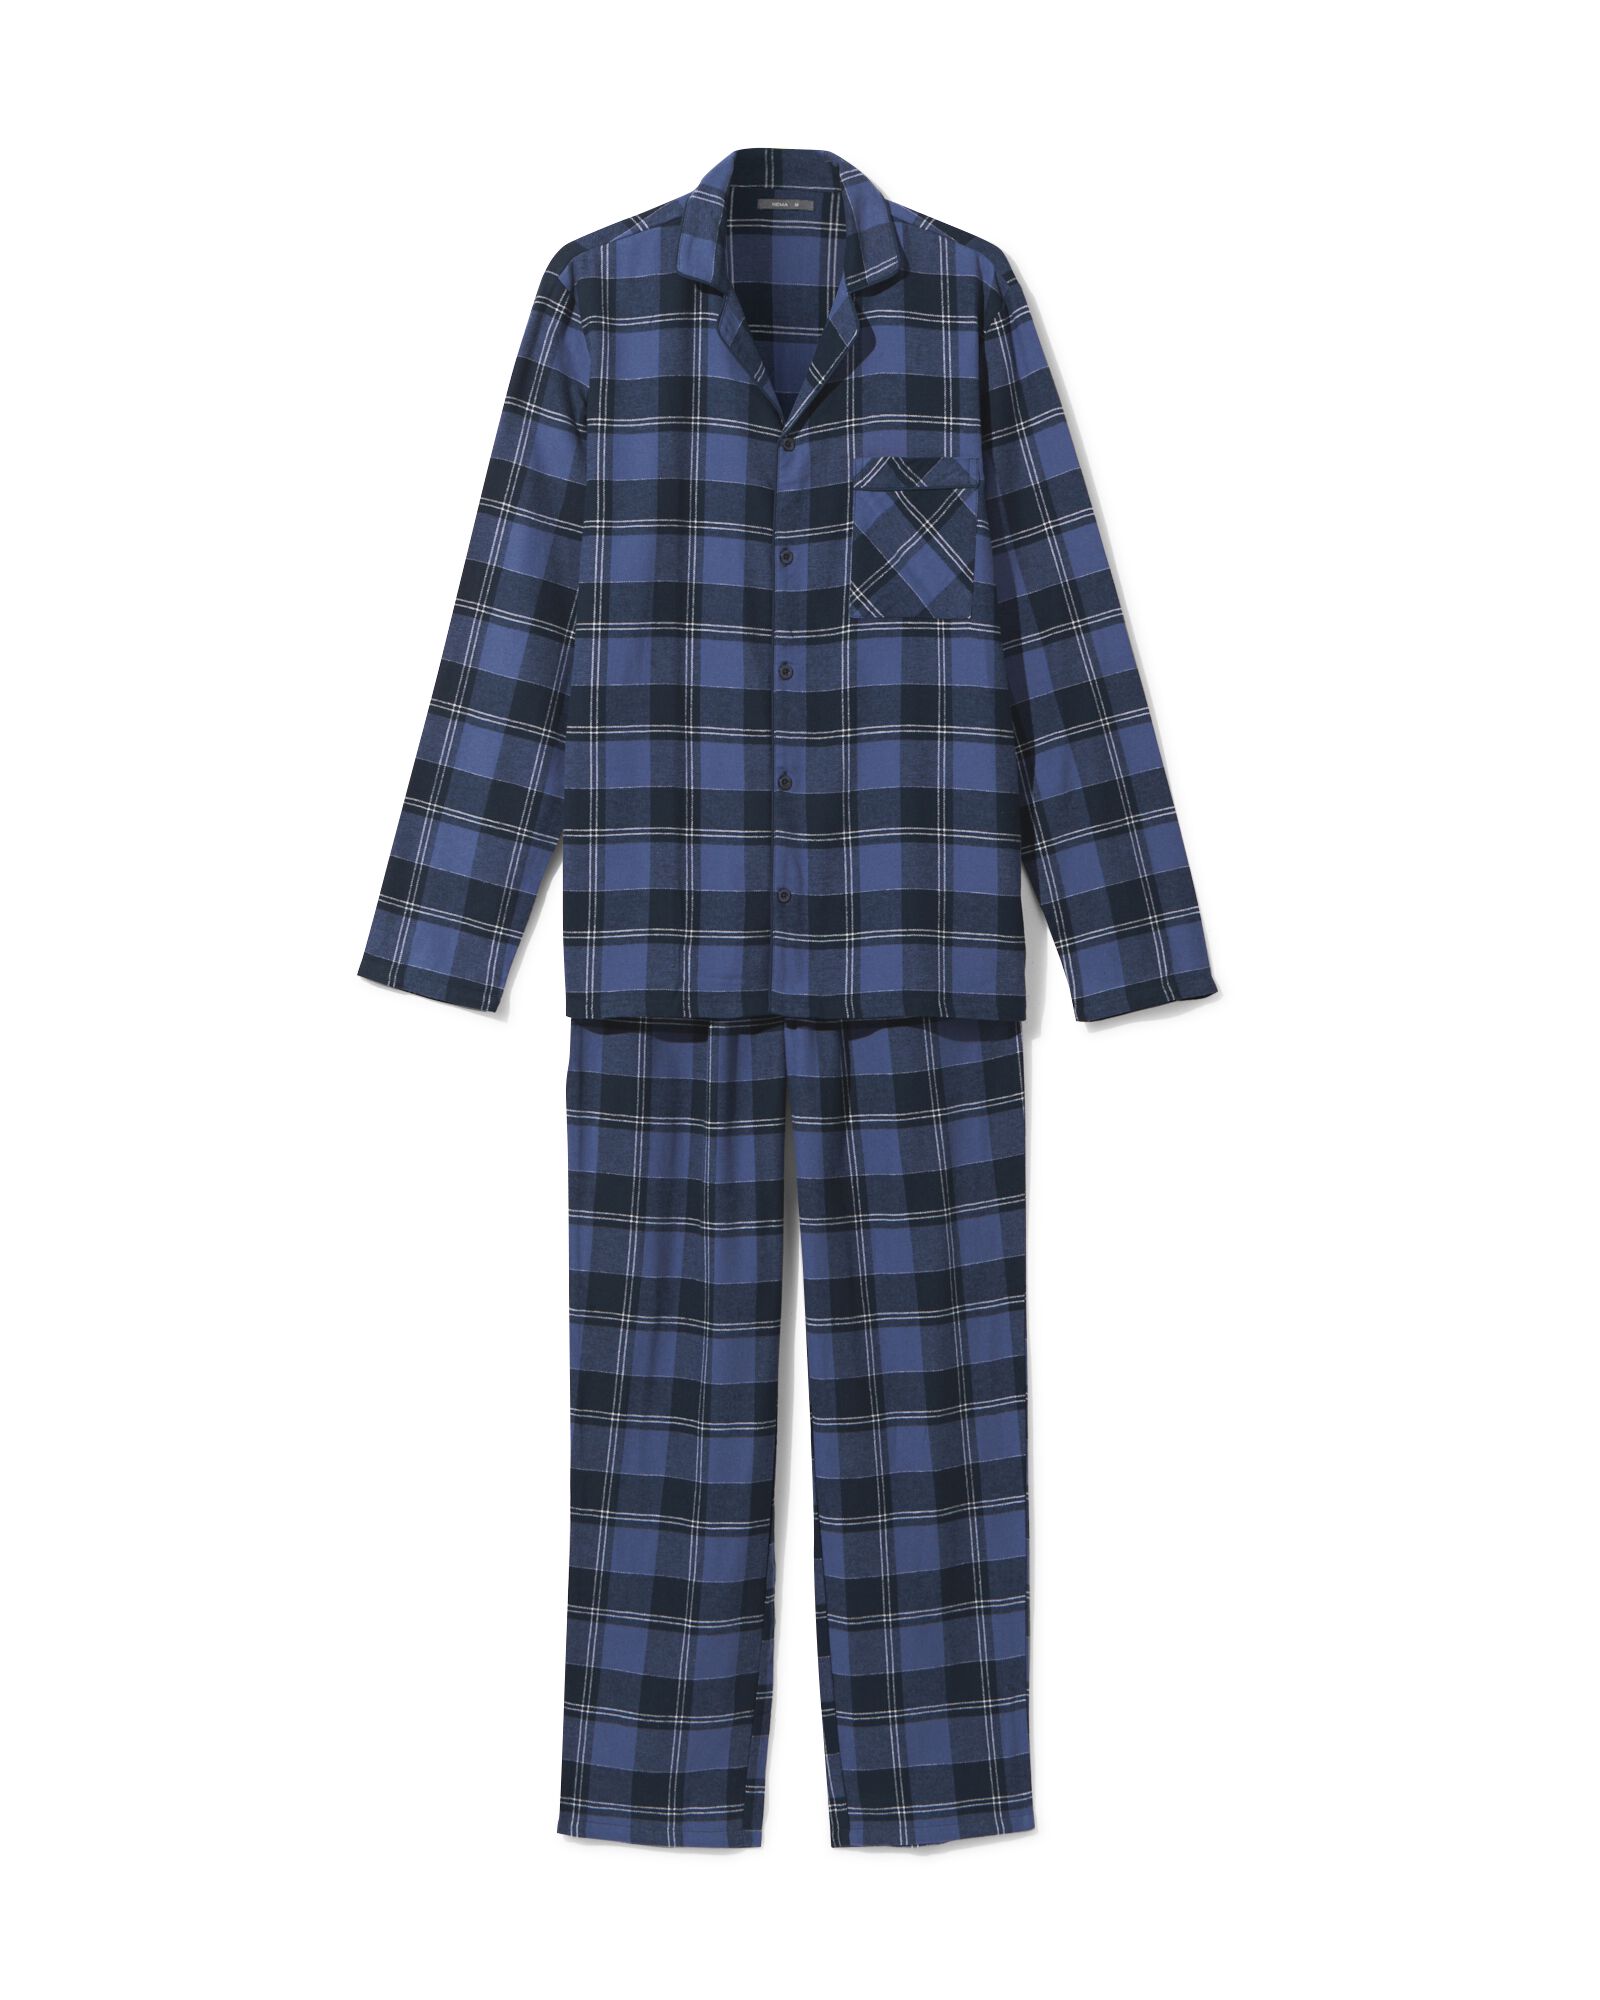 Herren-Pyjama, kariert, Baumwollflanell dunkelblau dunkelblau - 23630240DARKBLUE - HEMA